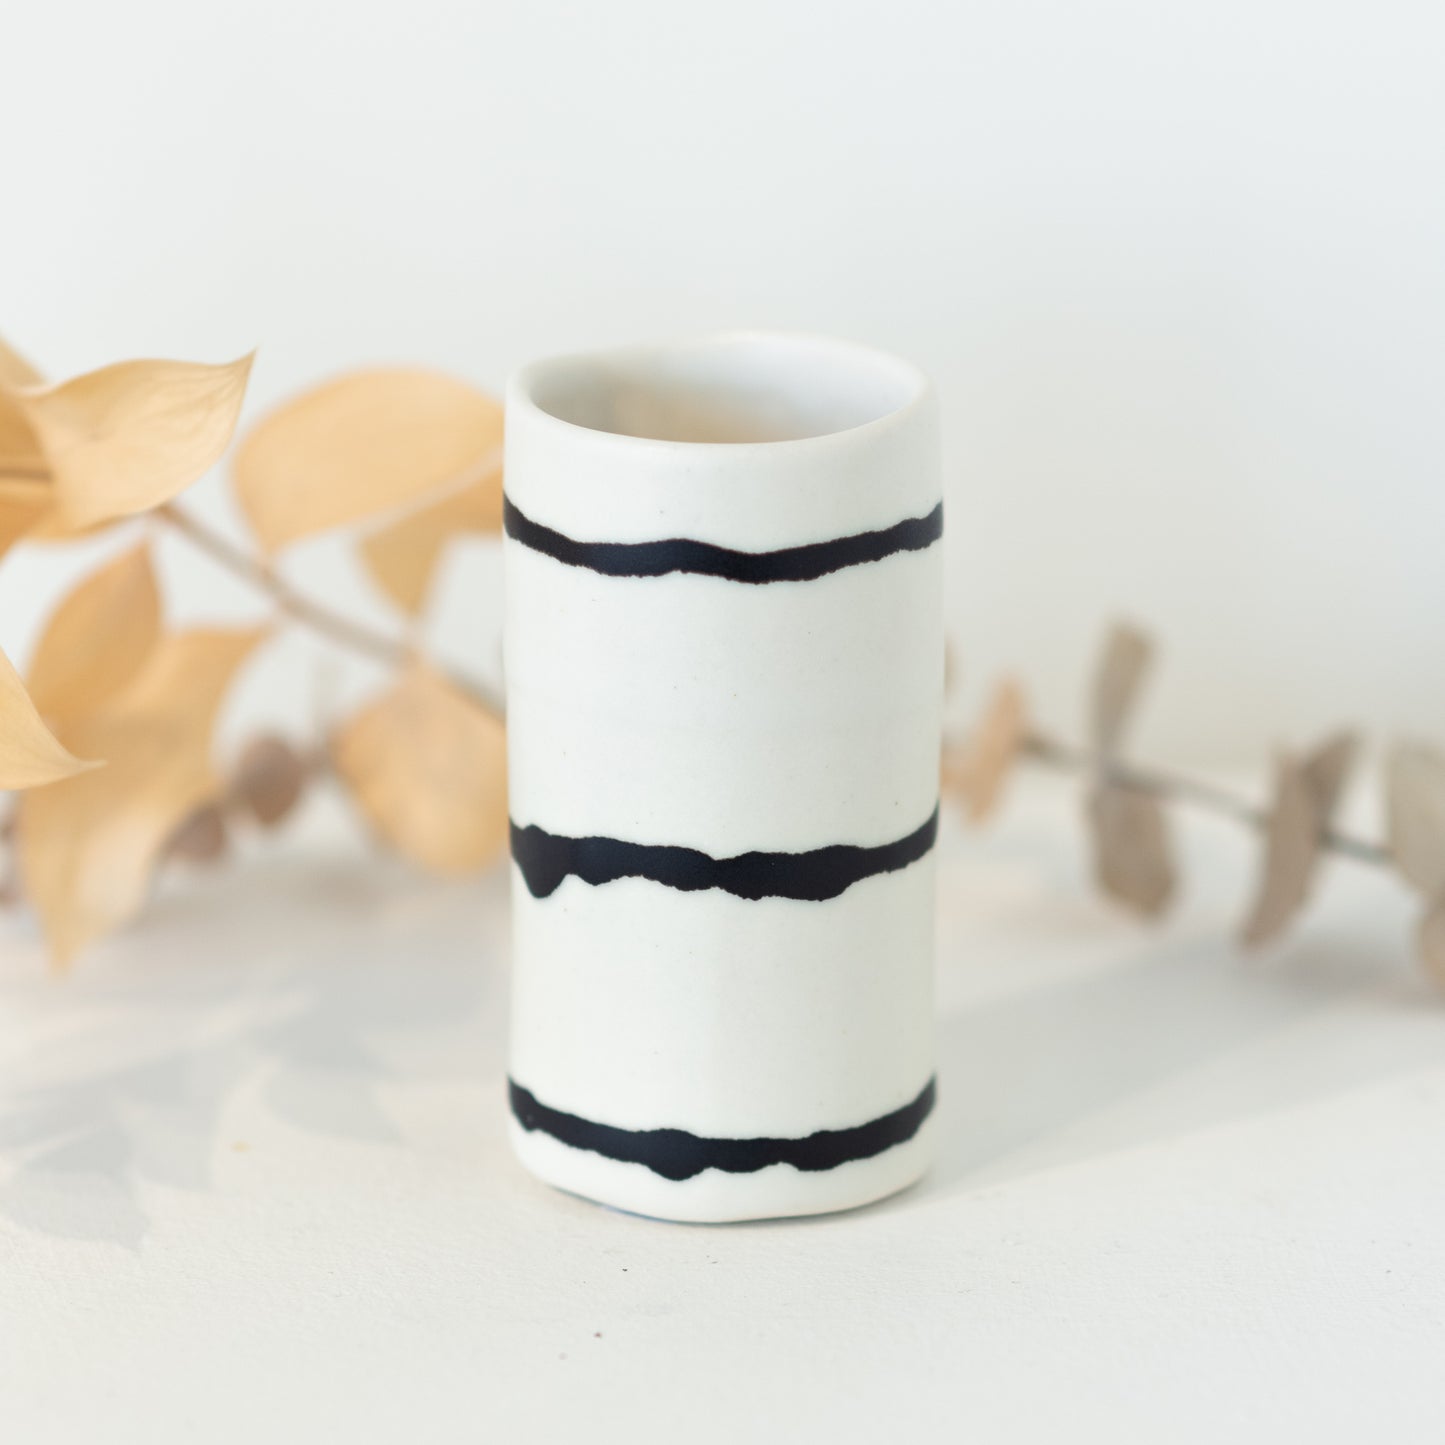 White vase with black irregular horizontal lines